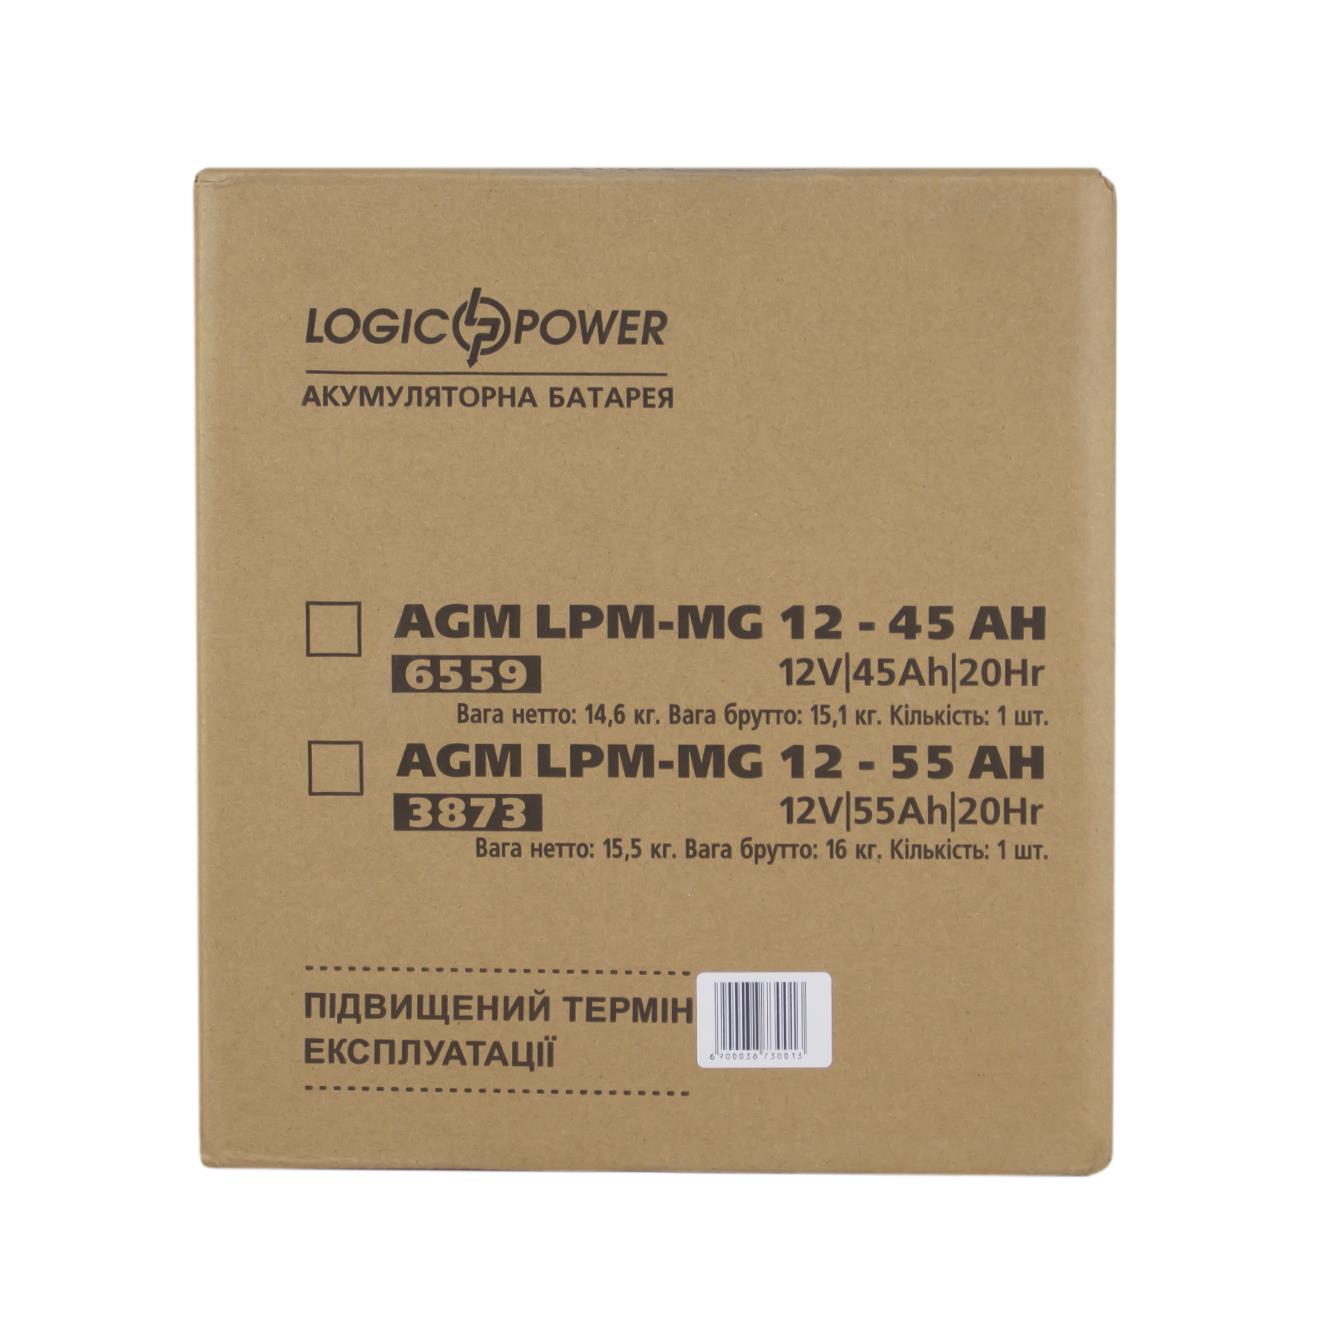 Акумулятор мультигелевий LogicPower LPM-MG 12V - 45 Ah (6559) характеристики - фотографія 7